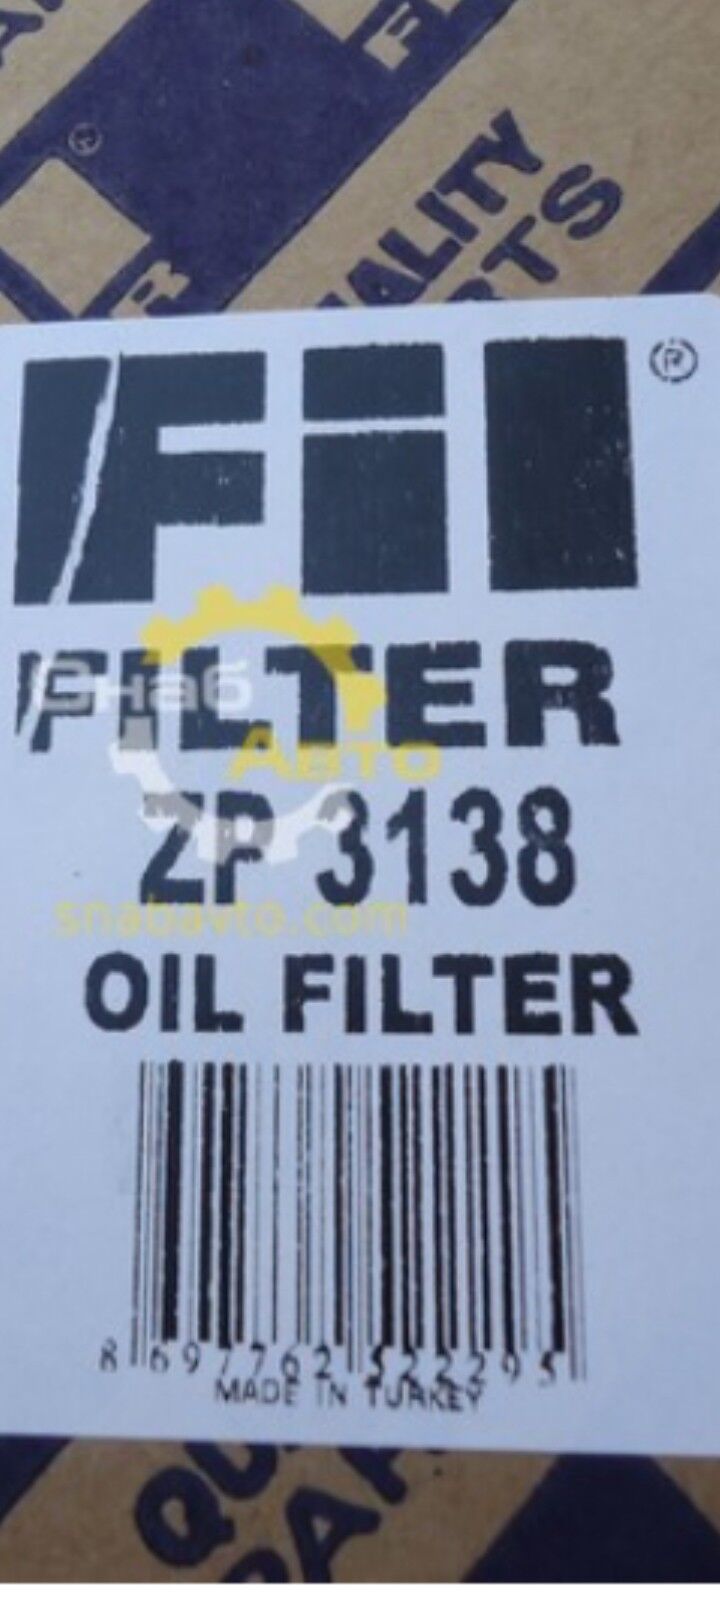 Filter Филтр FIL Zp 3138 250 TMT - Balkanabat - img 2